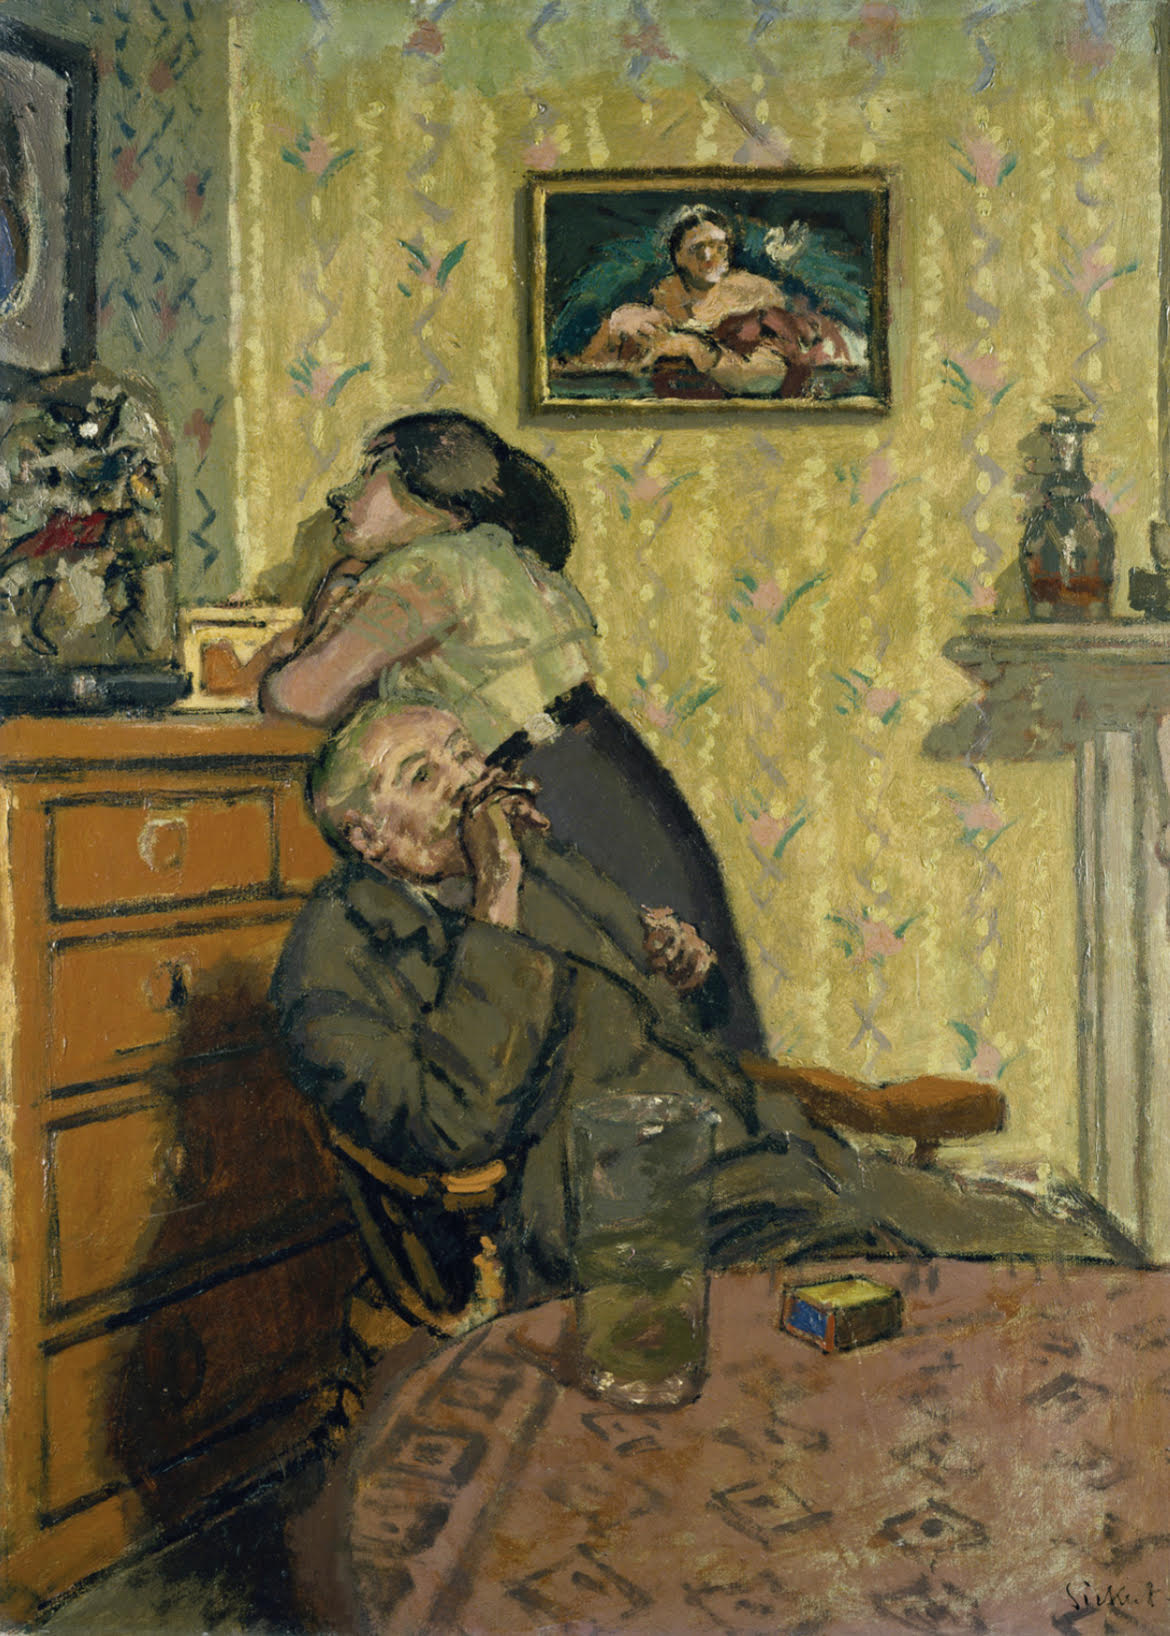 無聊 by Walter Sickert - 1914左右 - 152,4 x 112,4 cm 